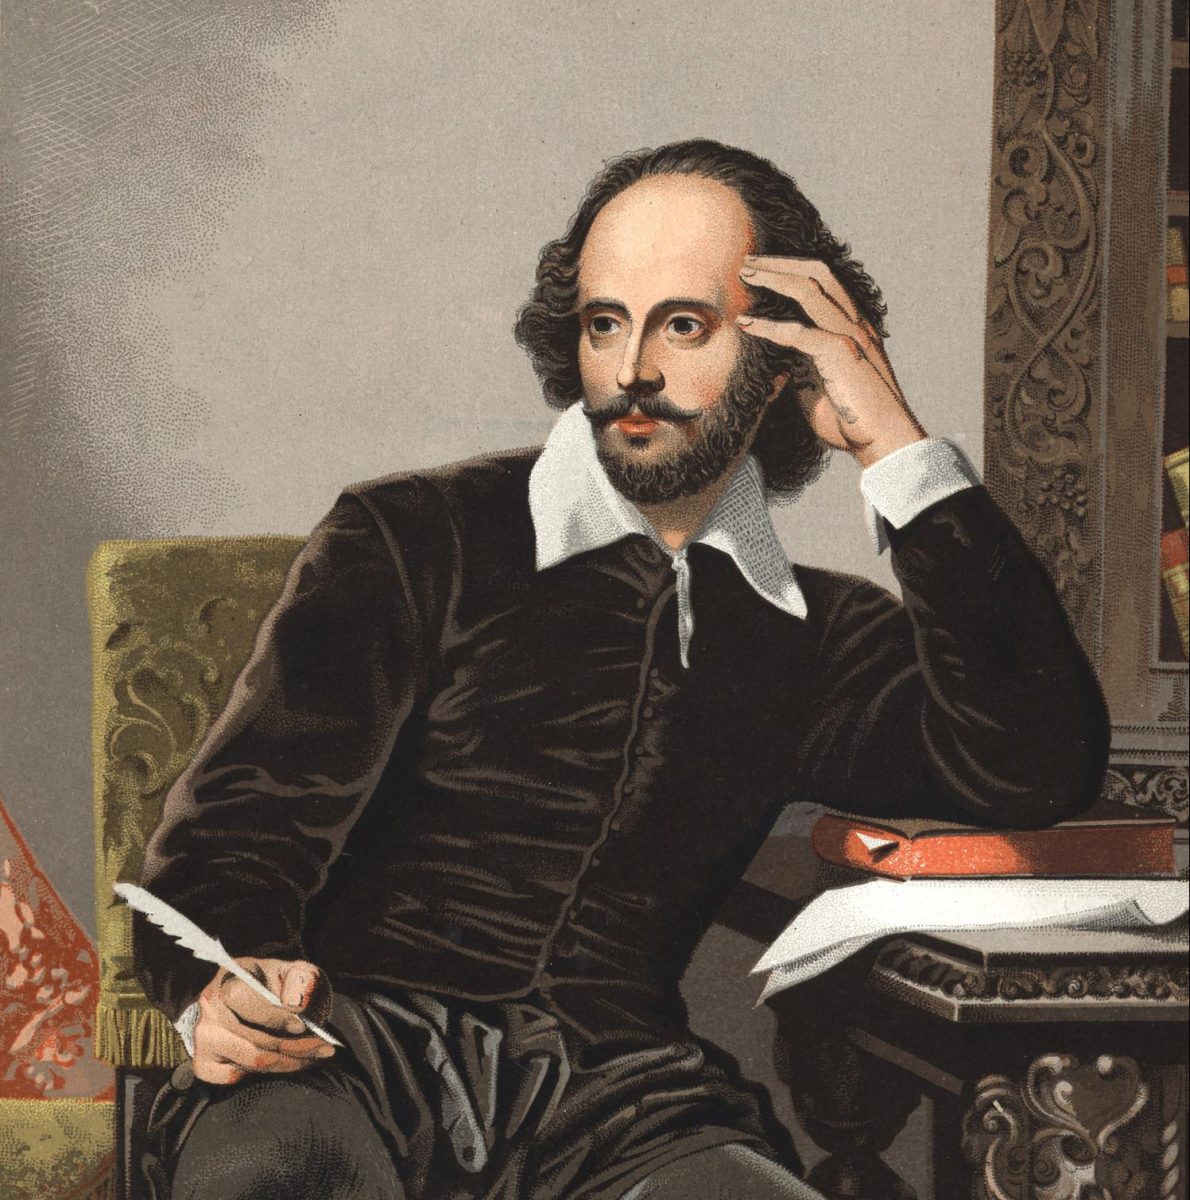 William Shakespeare, AKA The Bard